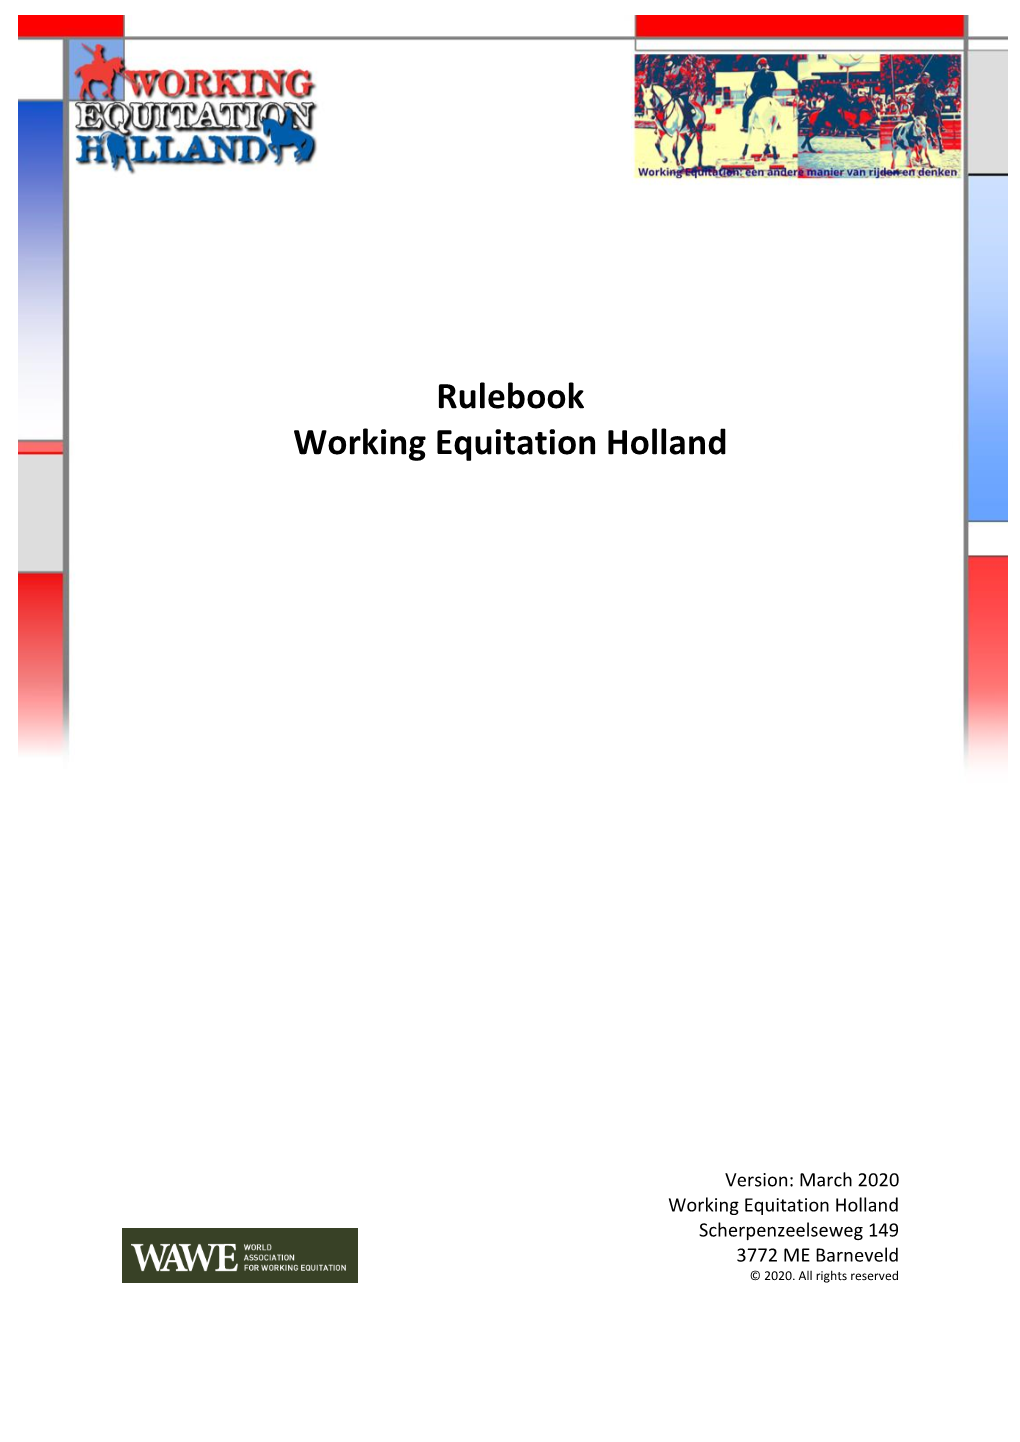 Rulebook Working Equitation Holland